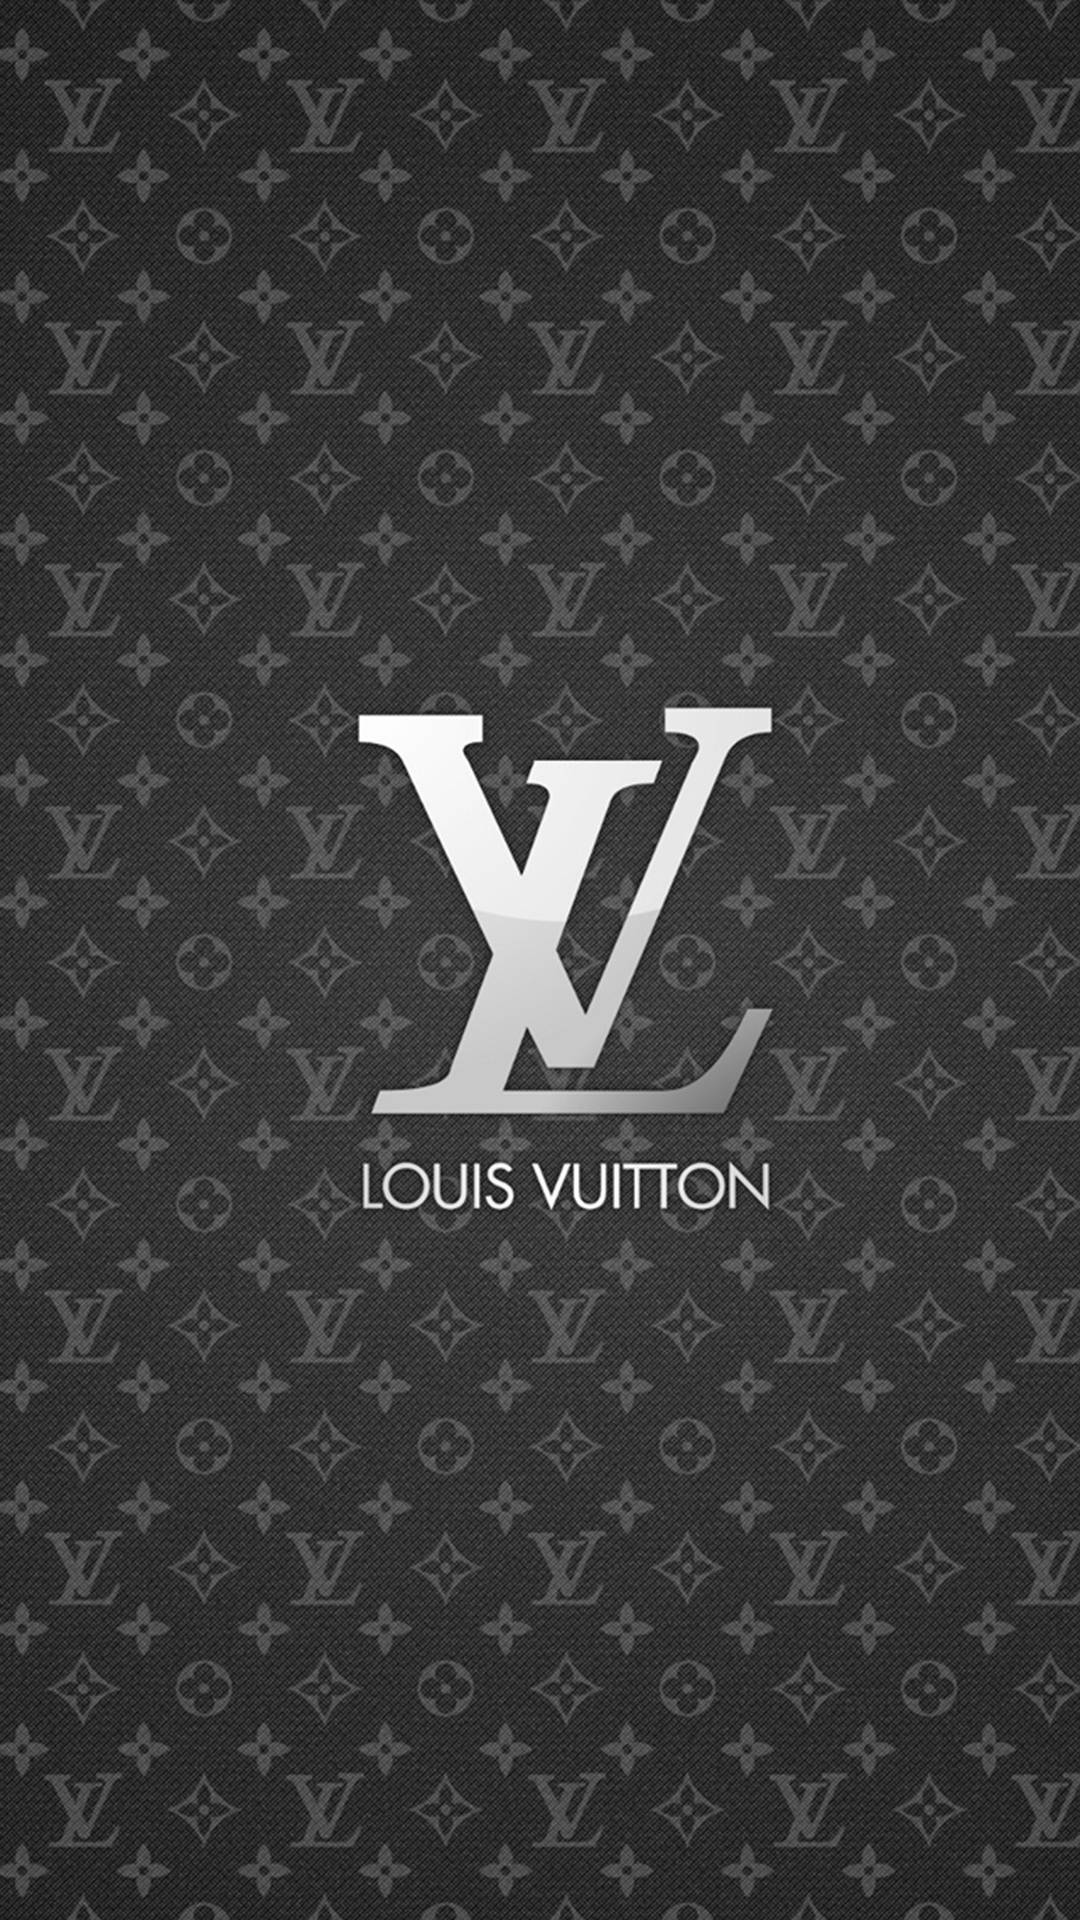 Download Silver Louis Vuitton iPhone Wallpaper